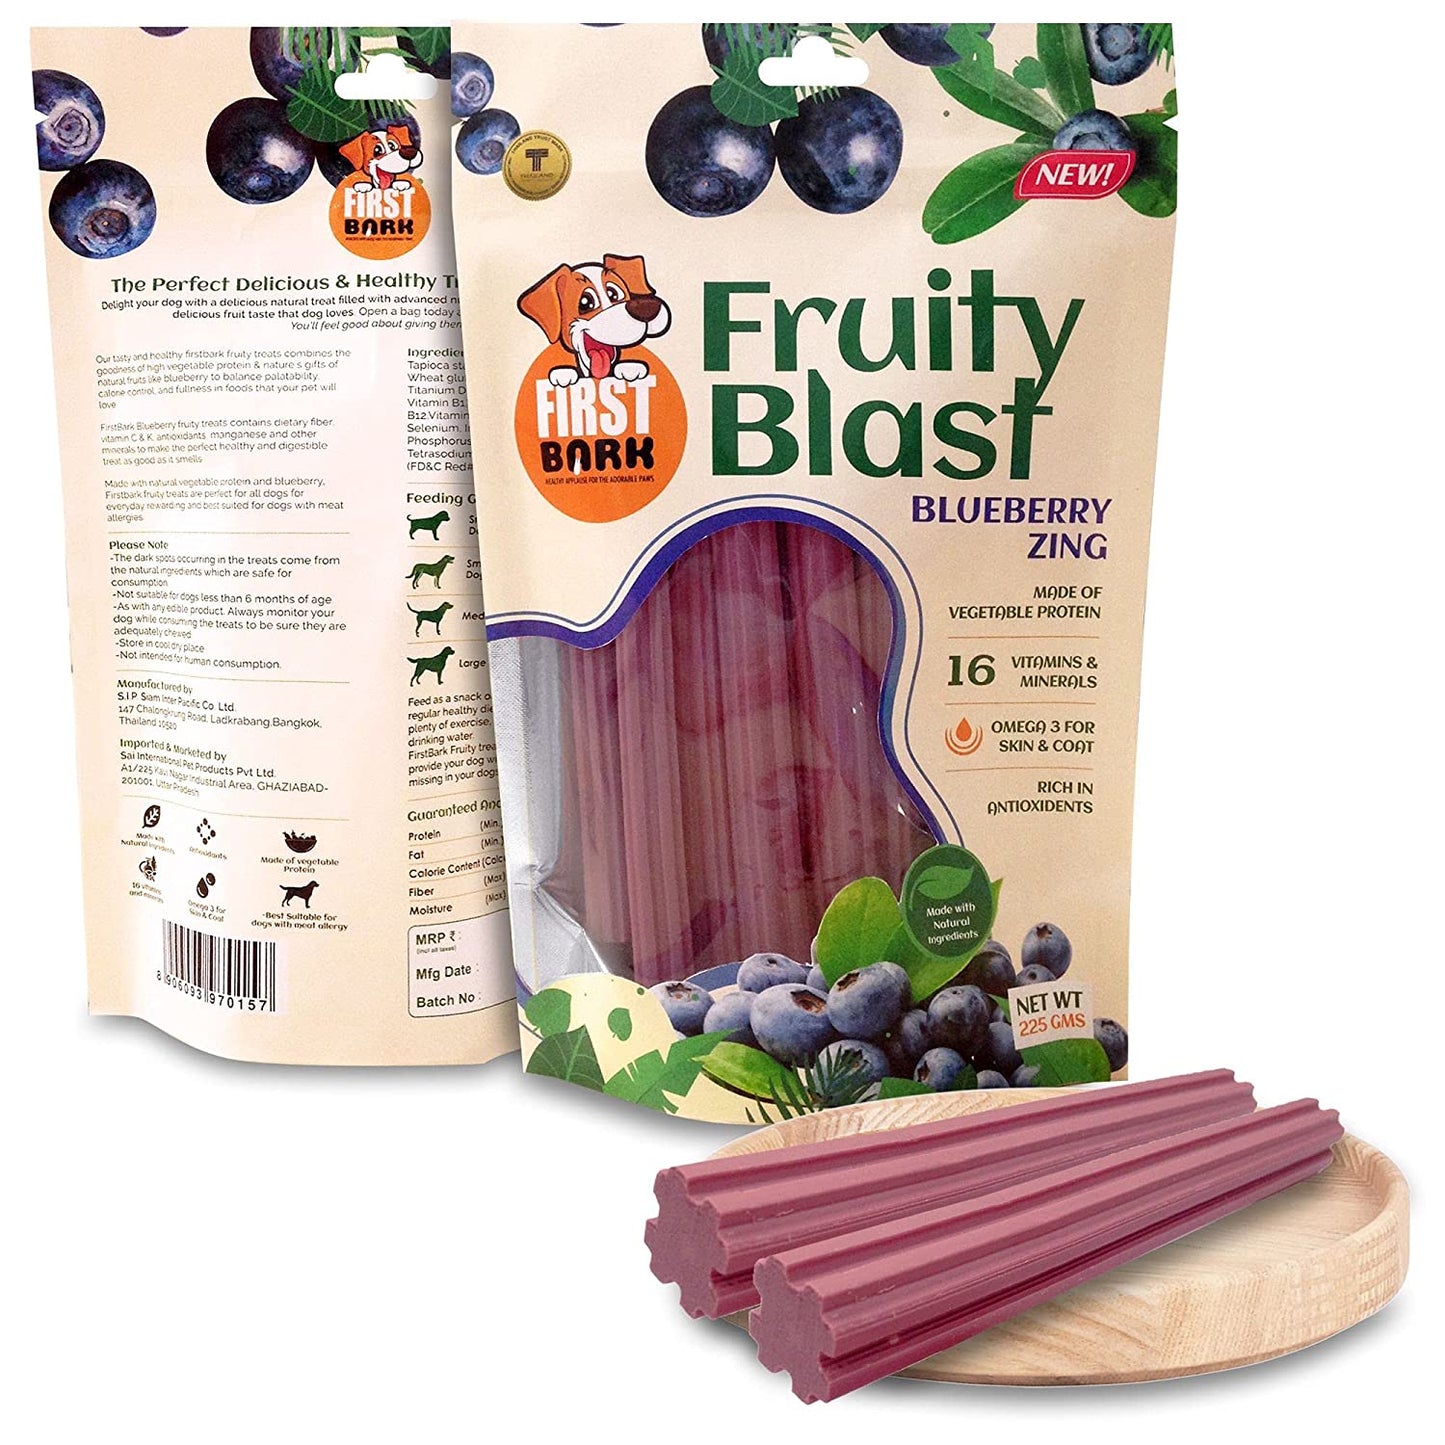 First Bark Fruity Blast Blueberry Zing - 225 gms